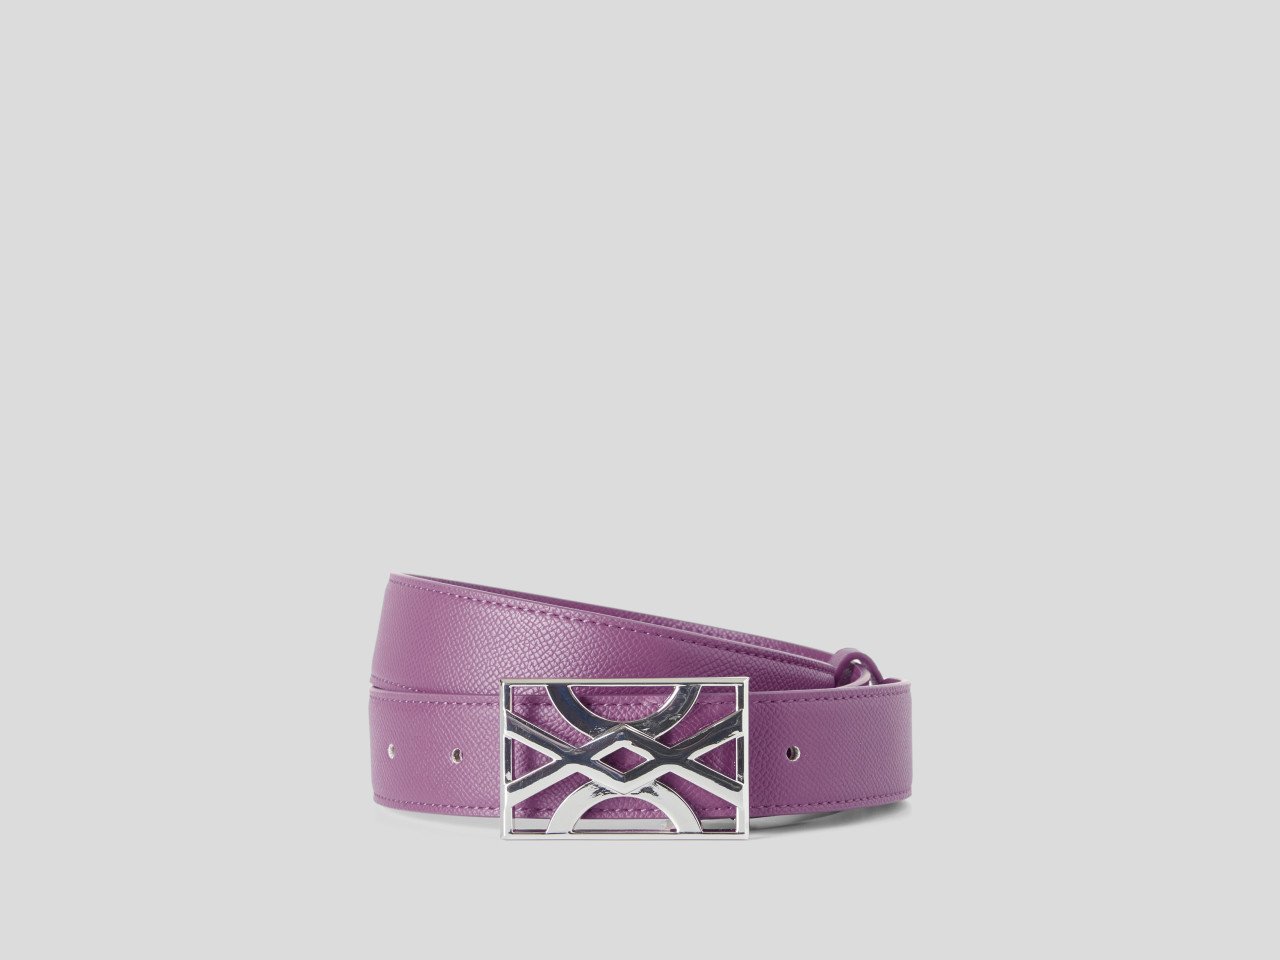 discount 74% Silver/Pink M WOMEN FASHION Accessories Belt Pink NoName belt 